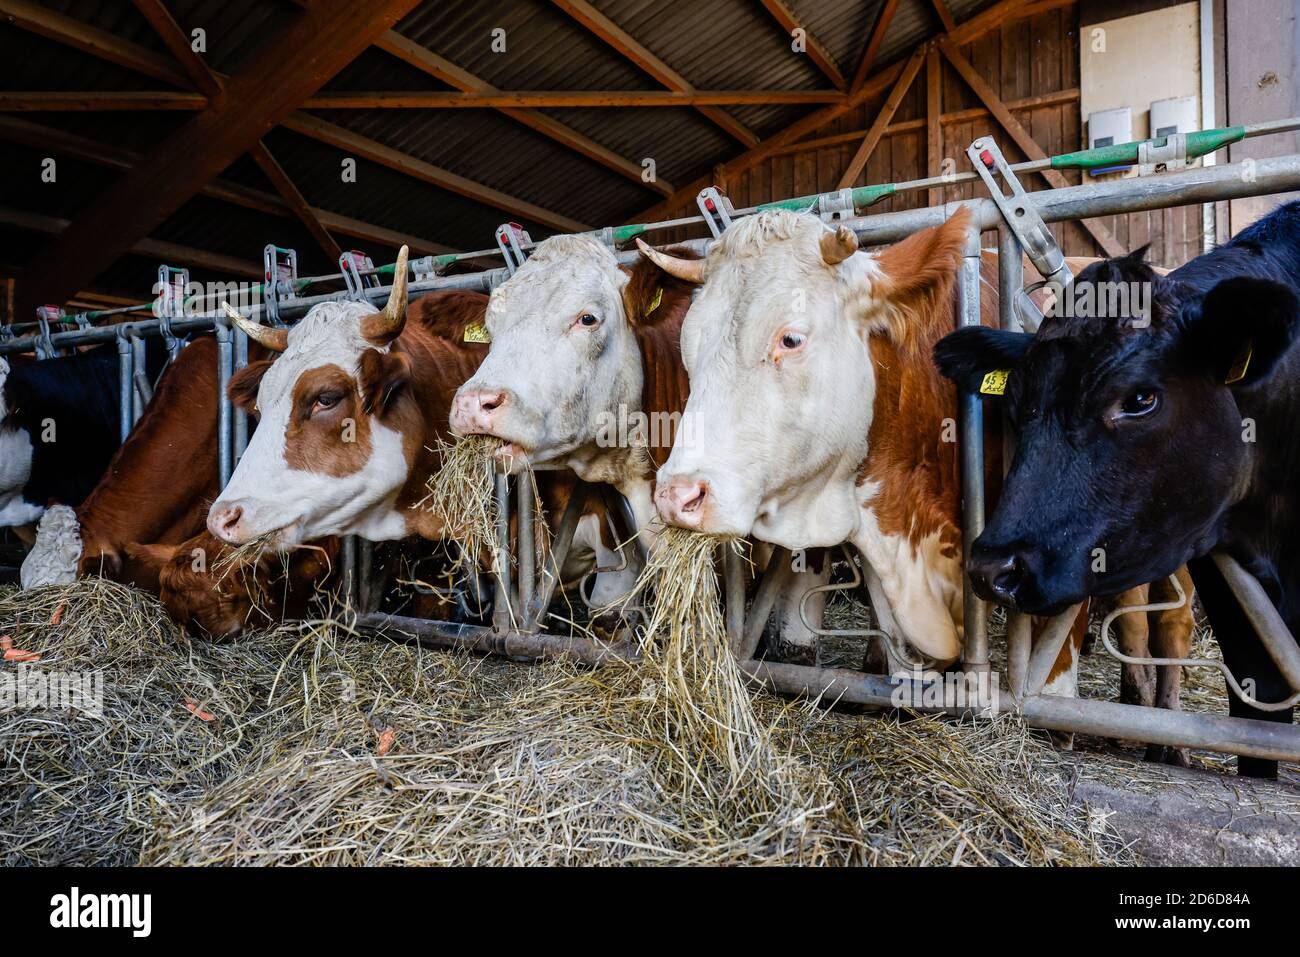 01.09.2020, Willich, North Rhine-Westphalia, Germany - Oekolandbau NRW, organic fattening cattle eat hay in the open stable on the Stautenhof, an orga Stock Photo